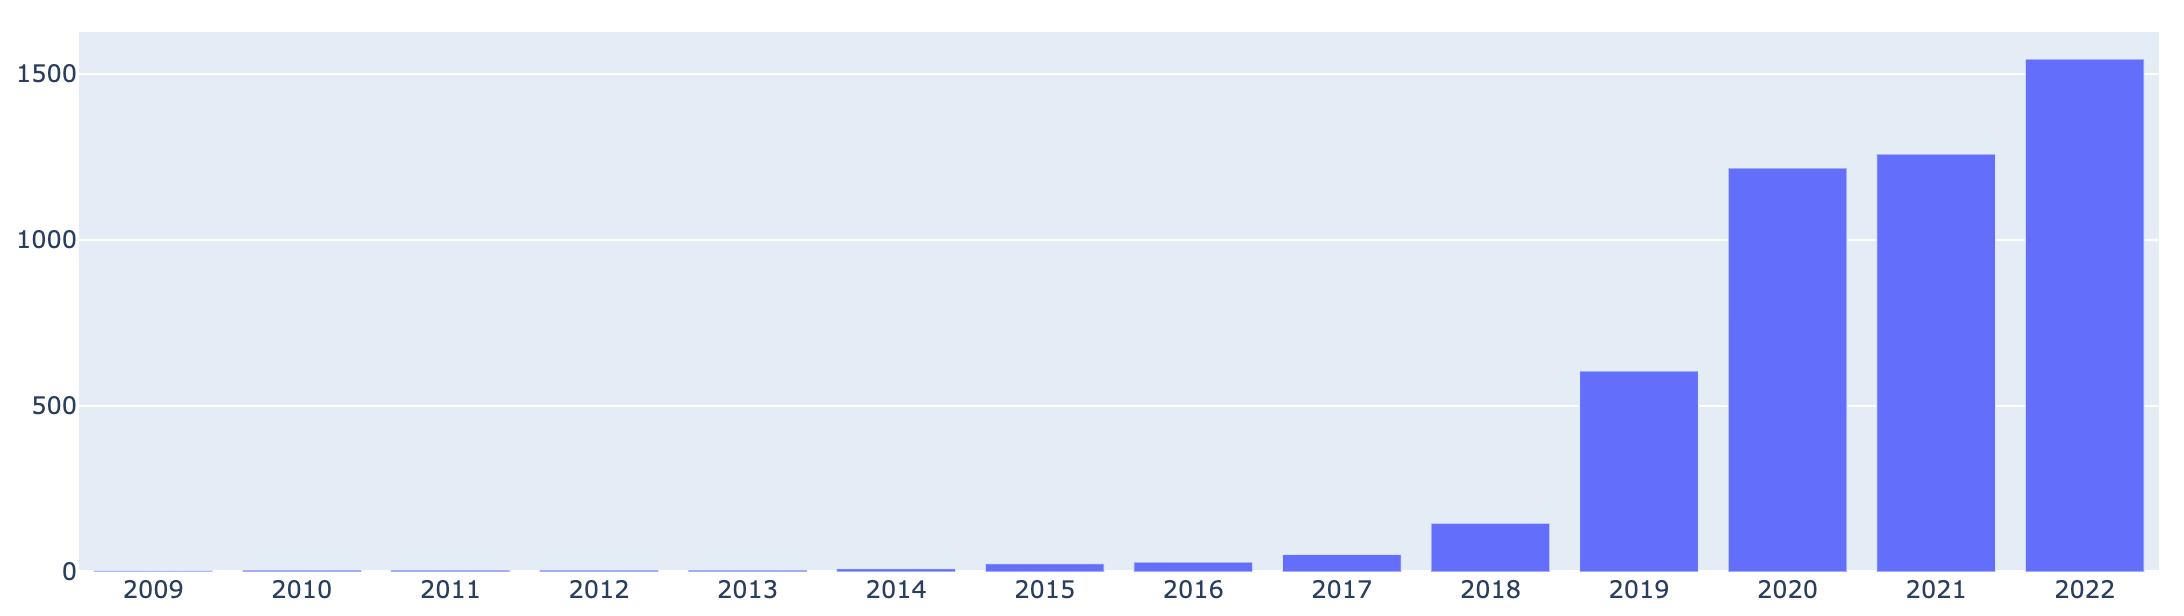 NAV.no average weekly service deployments, 2009 - 2022